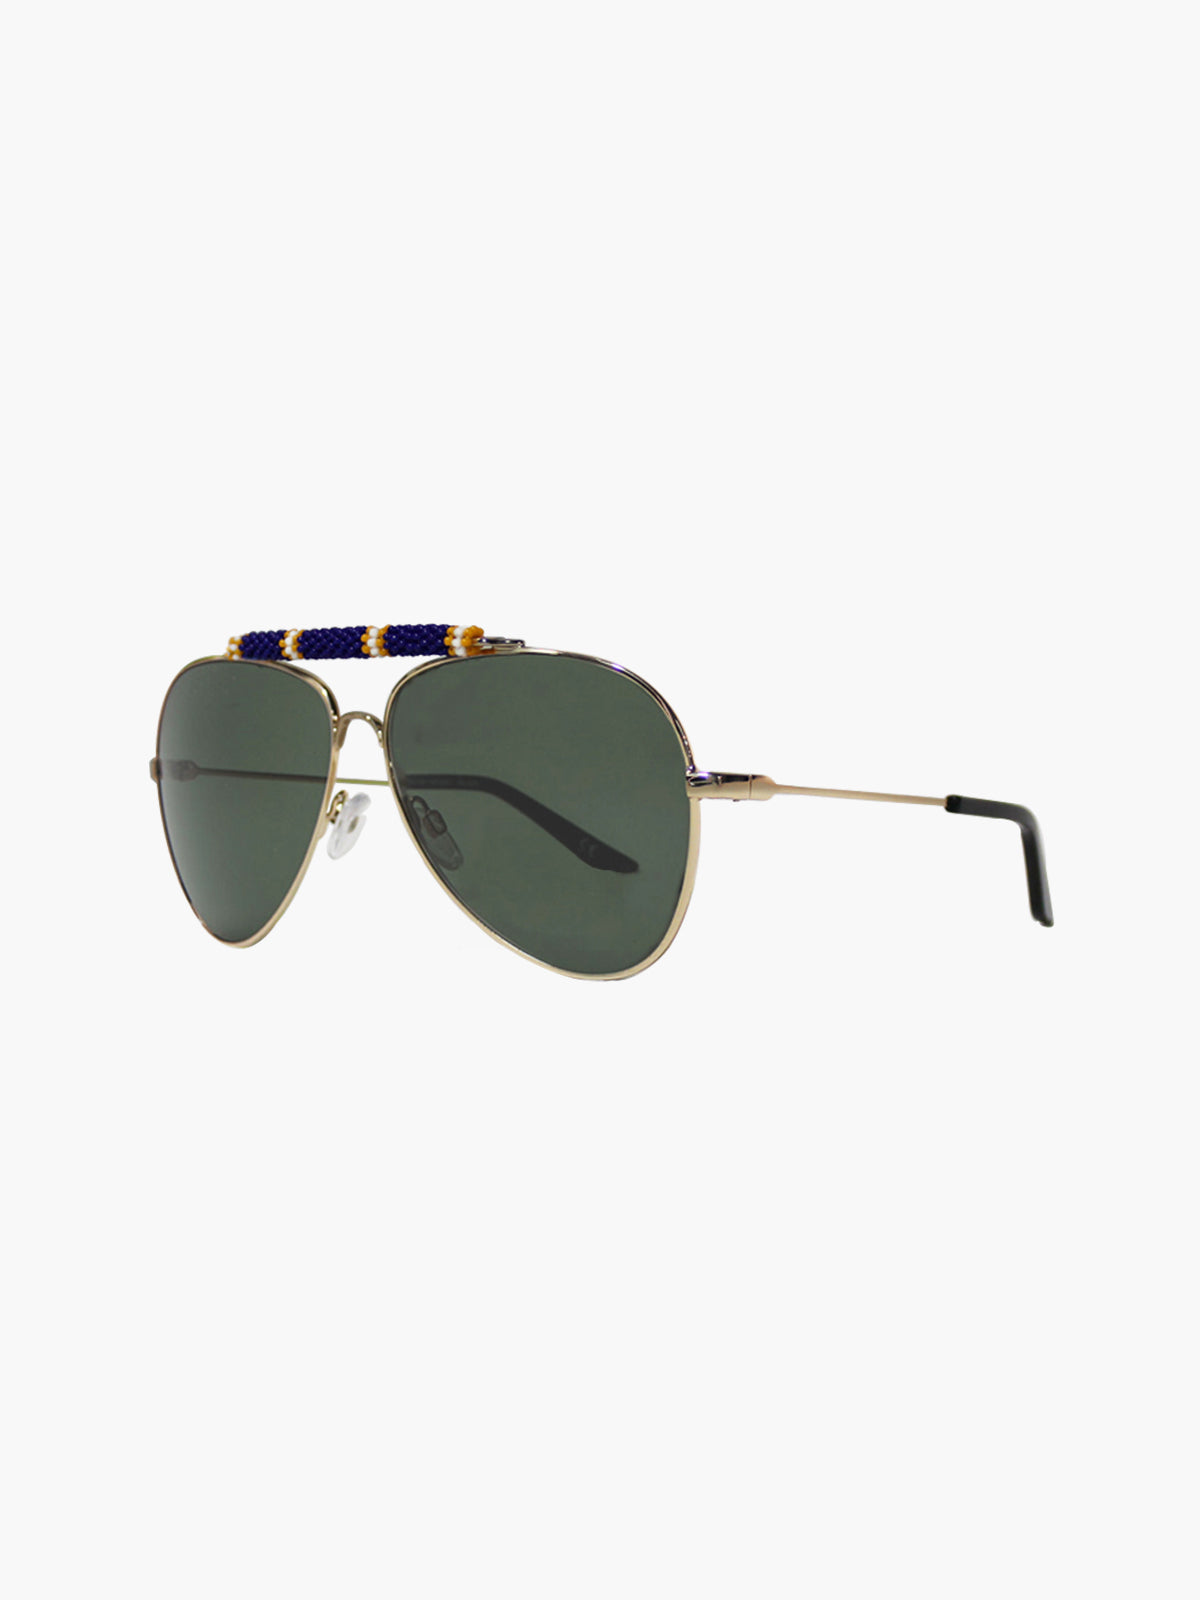 Exclusive Sunglasses | Blue/Yellow - Fashionkind